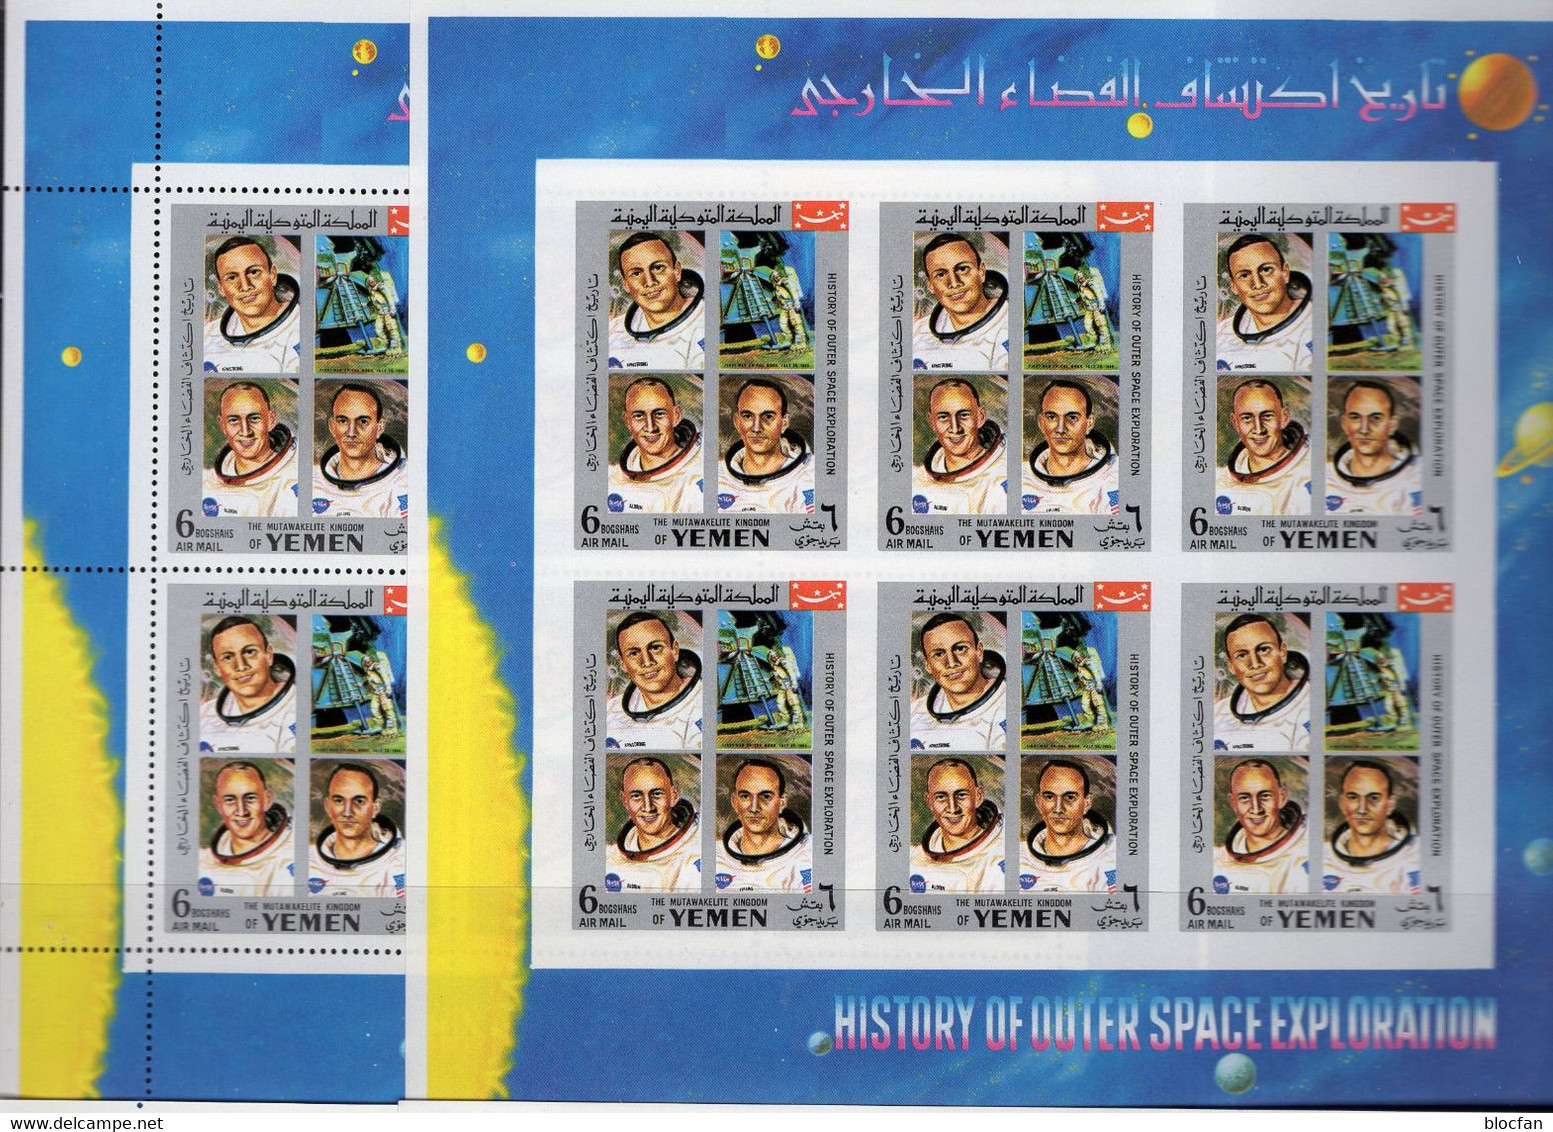 USA-Astronauten 1969 Jemen 883 Kleinbogen A/B ** 12€ Apollo 11 Sheets Ss Sheetlets M/s Bf History Space Exploration - Perfins